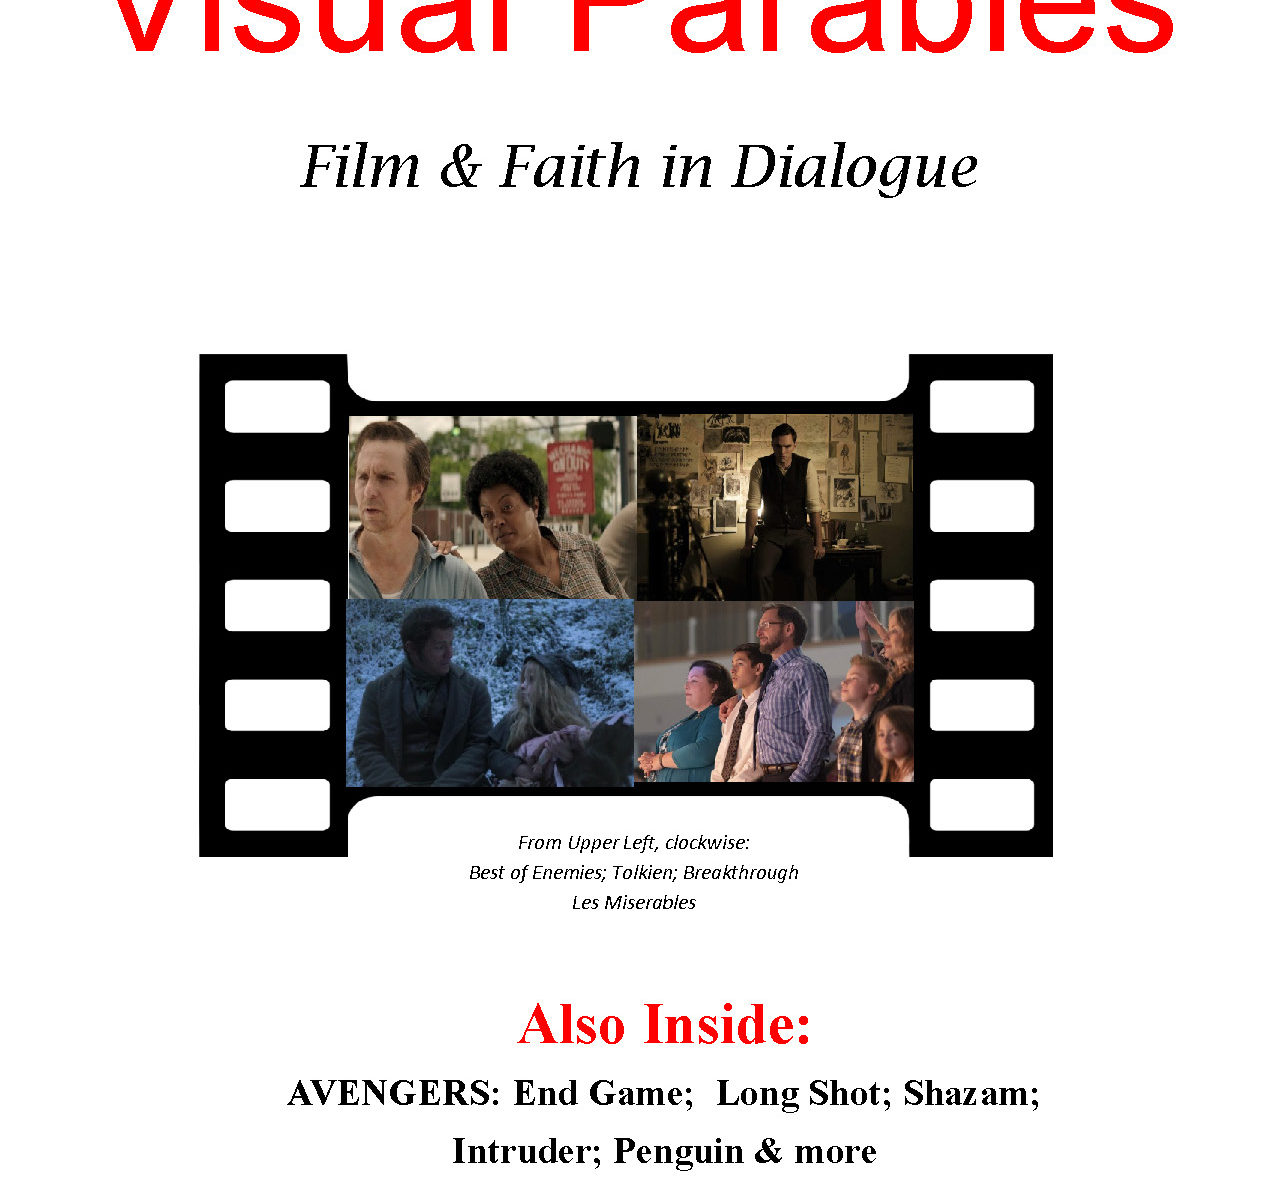 Visual Parables May 2019 issue